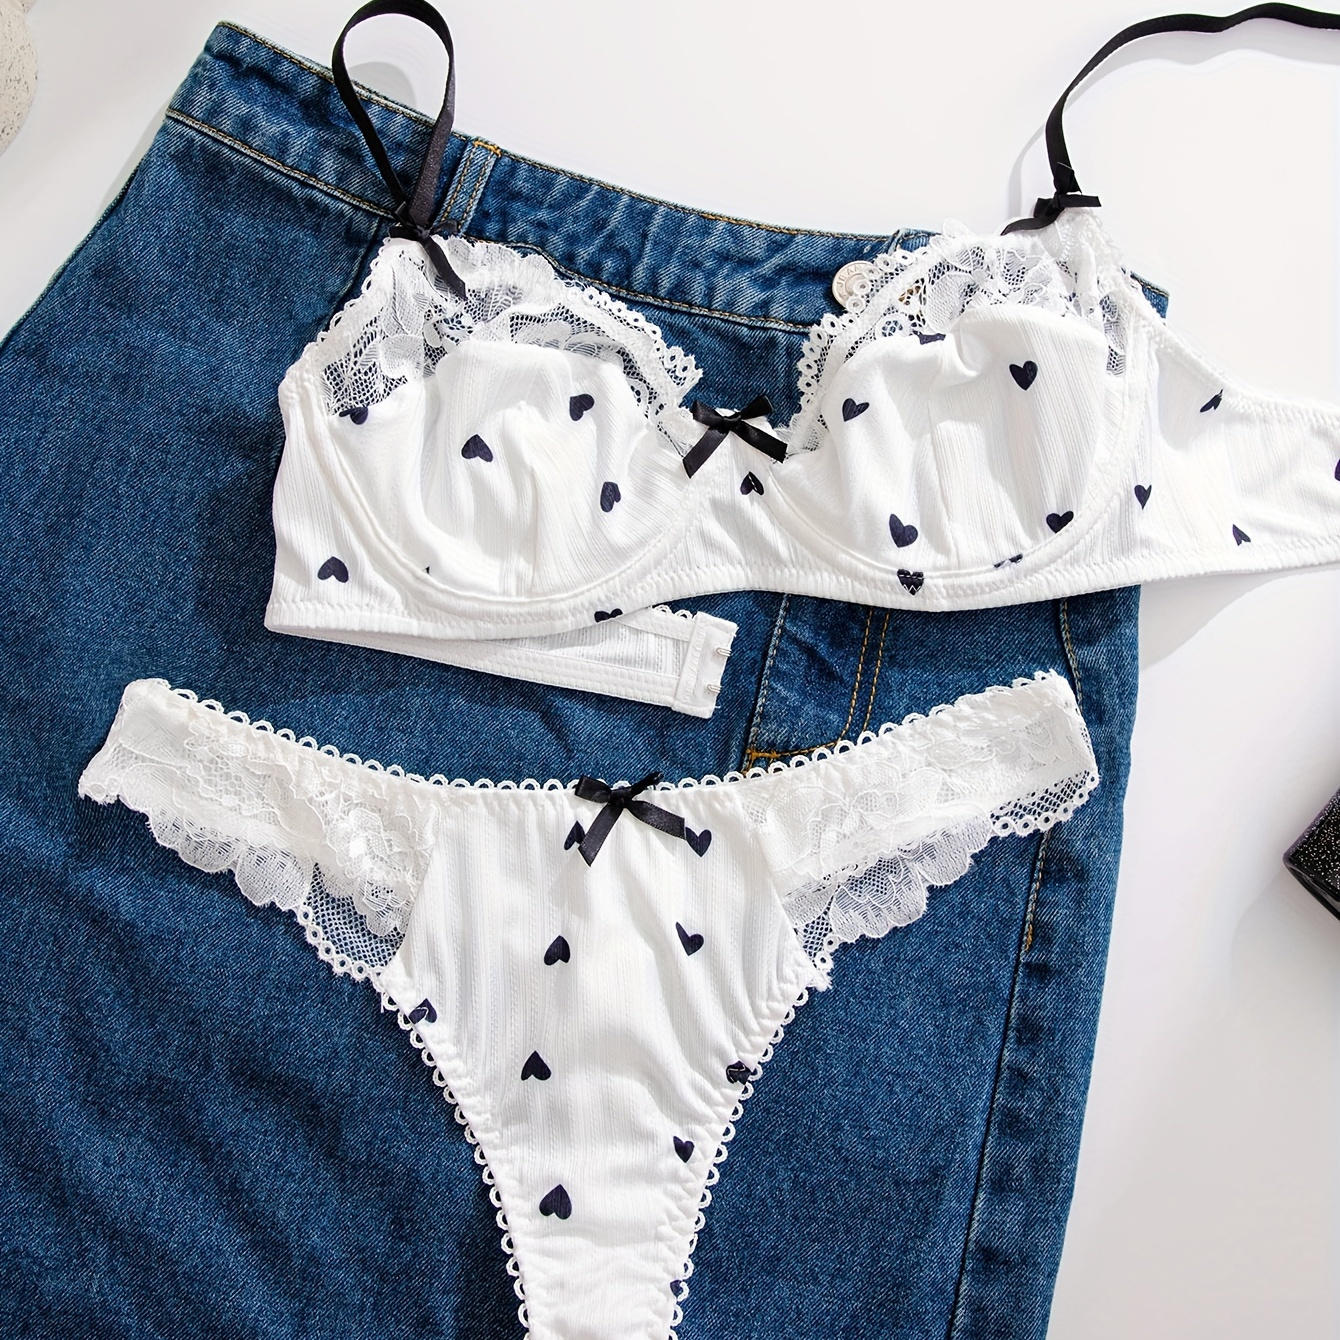 

Heart Print Bra & Panties, Contrast Lace Bra & Elastic Thong Lingerie Set, Women's Lingerie & Underwear